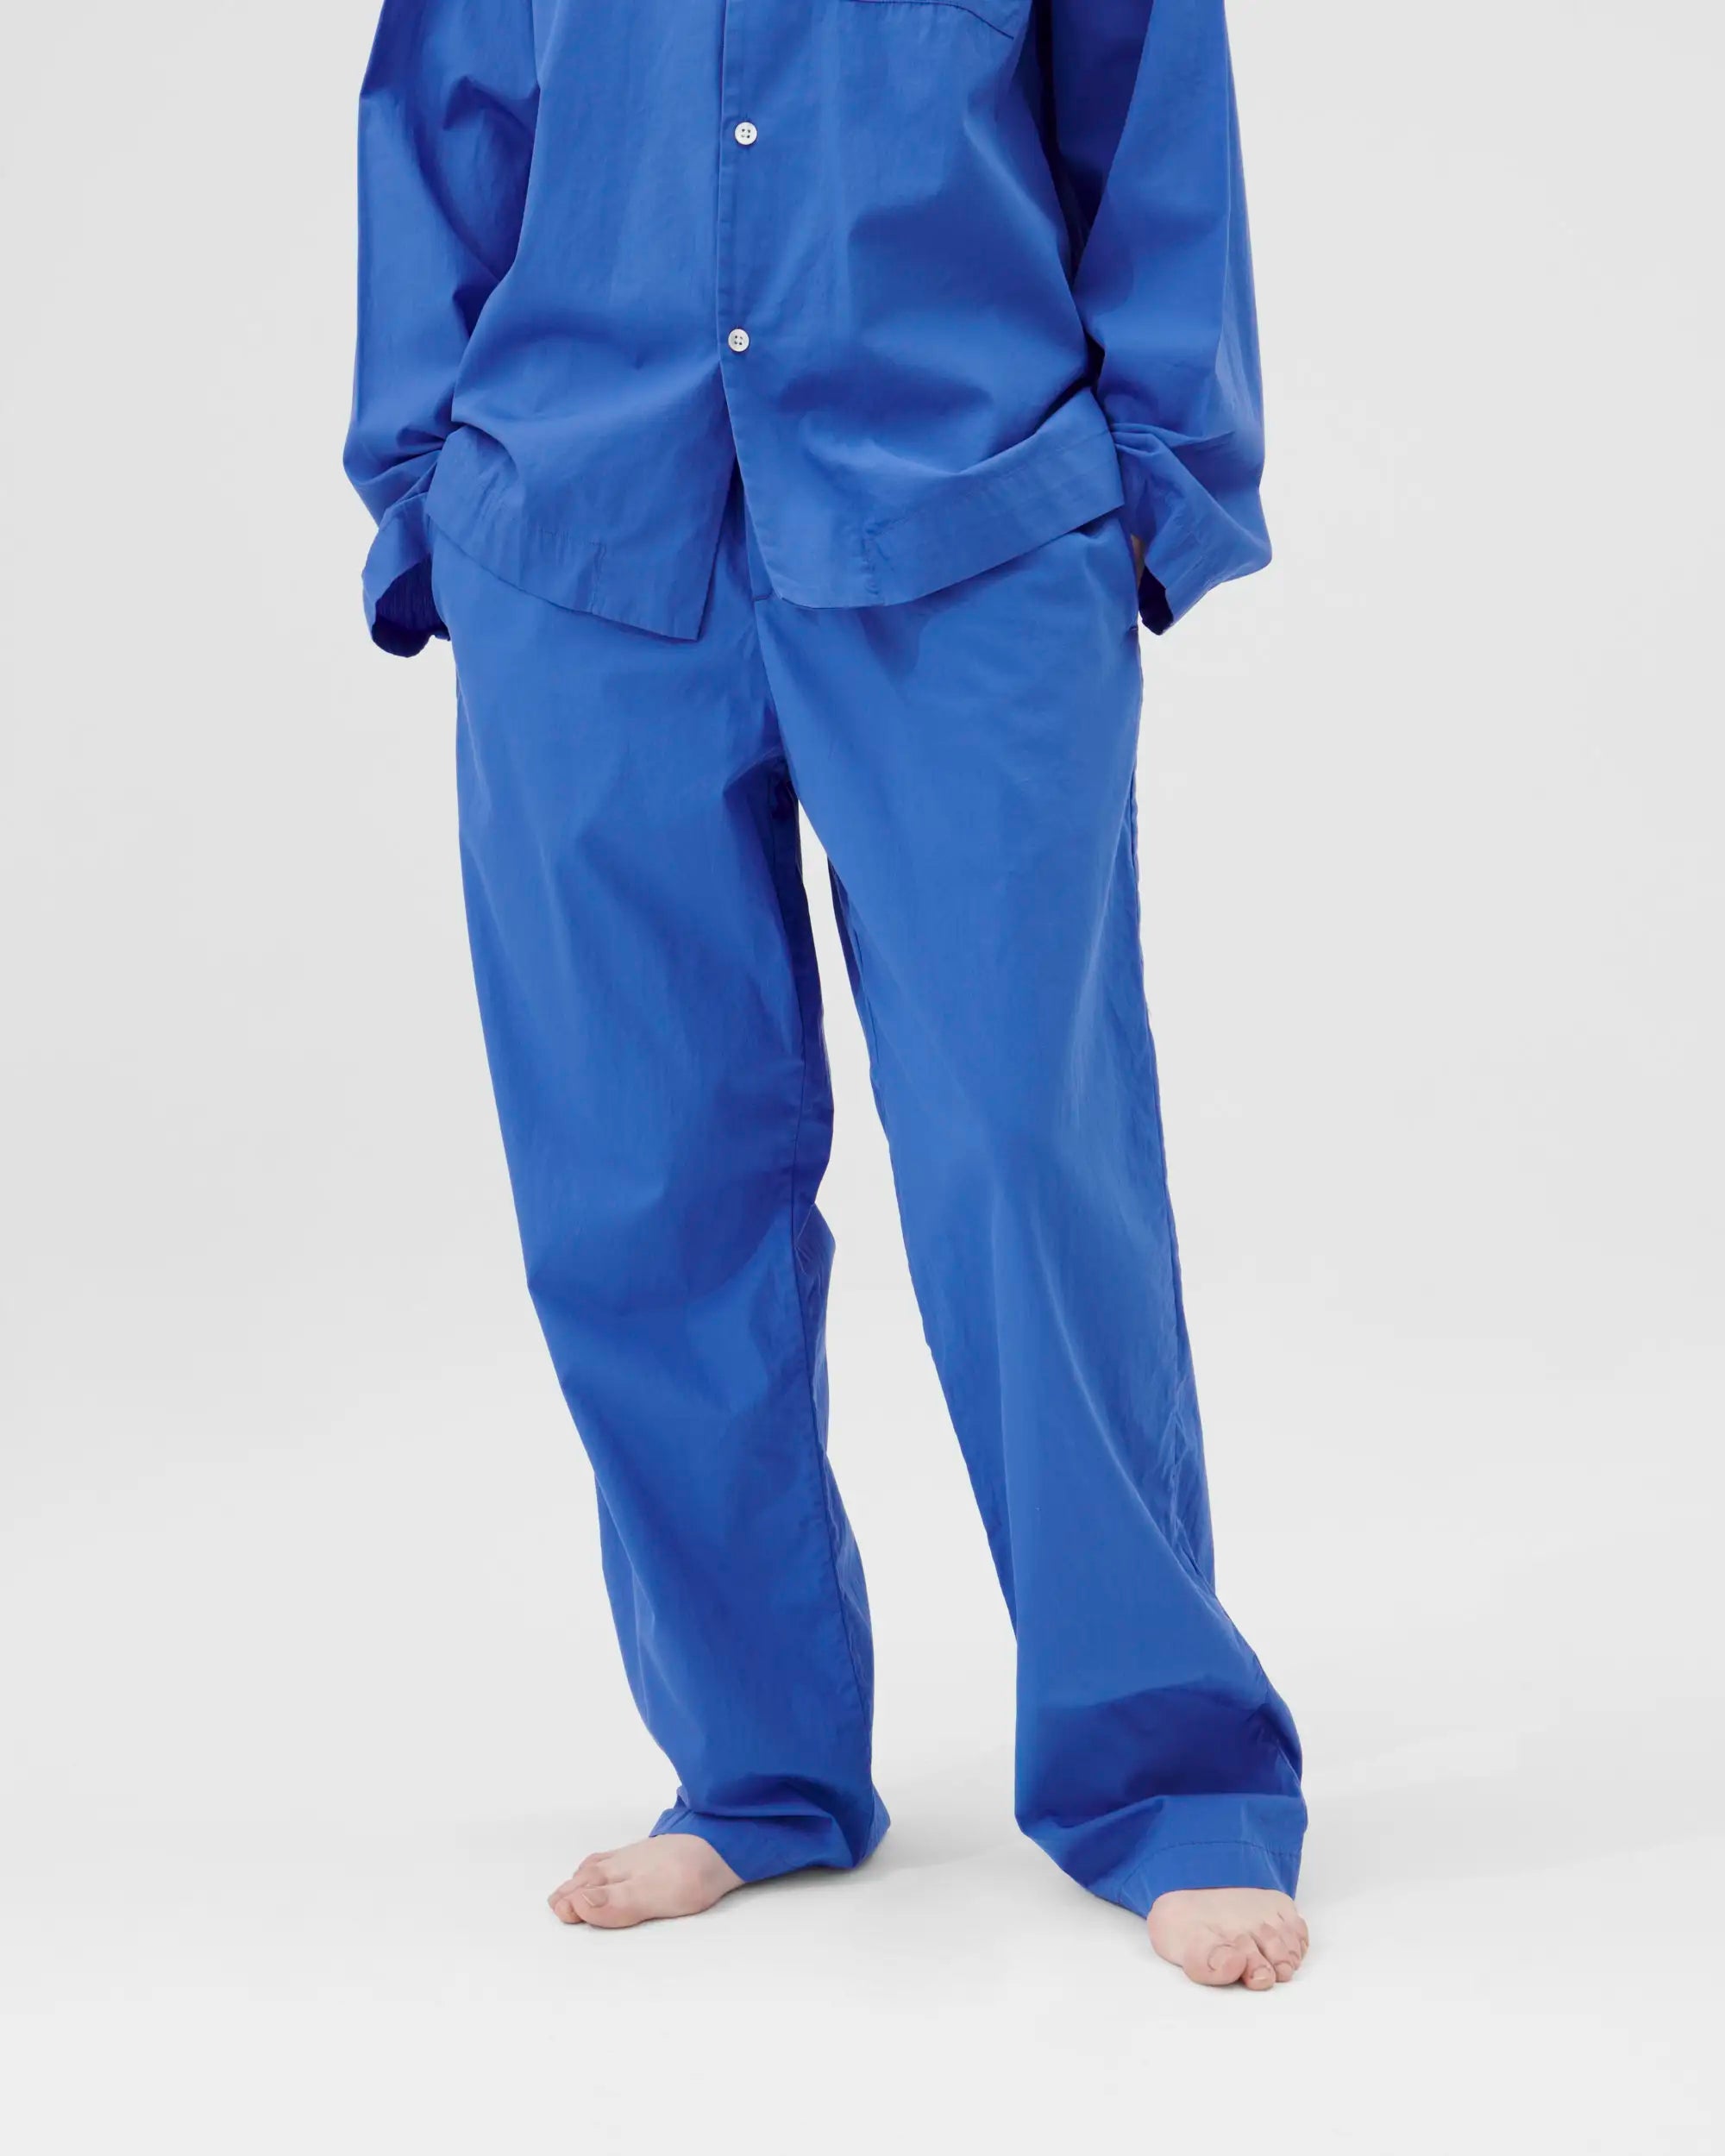 Sleepwear (Poplin) L/S Shirt - Royal Blue